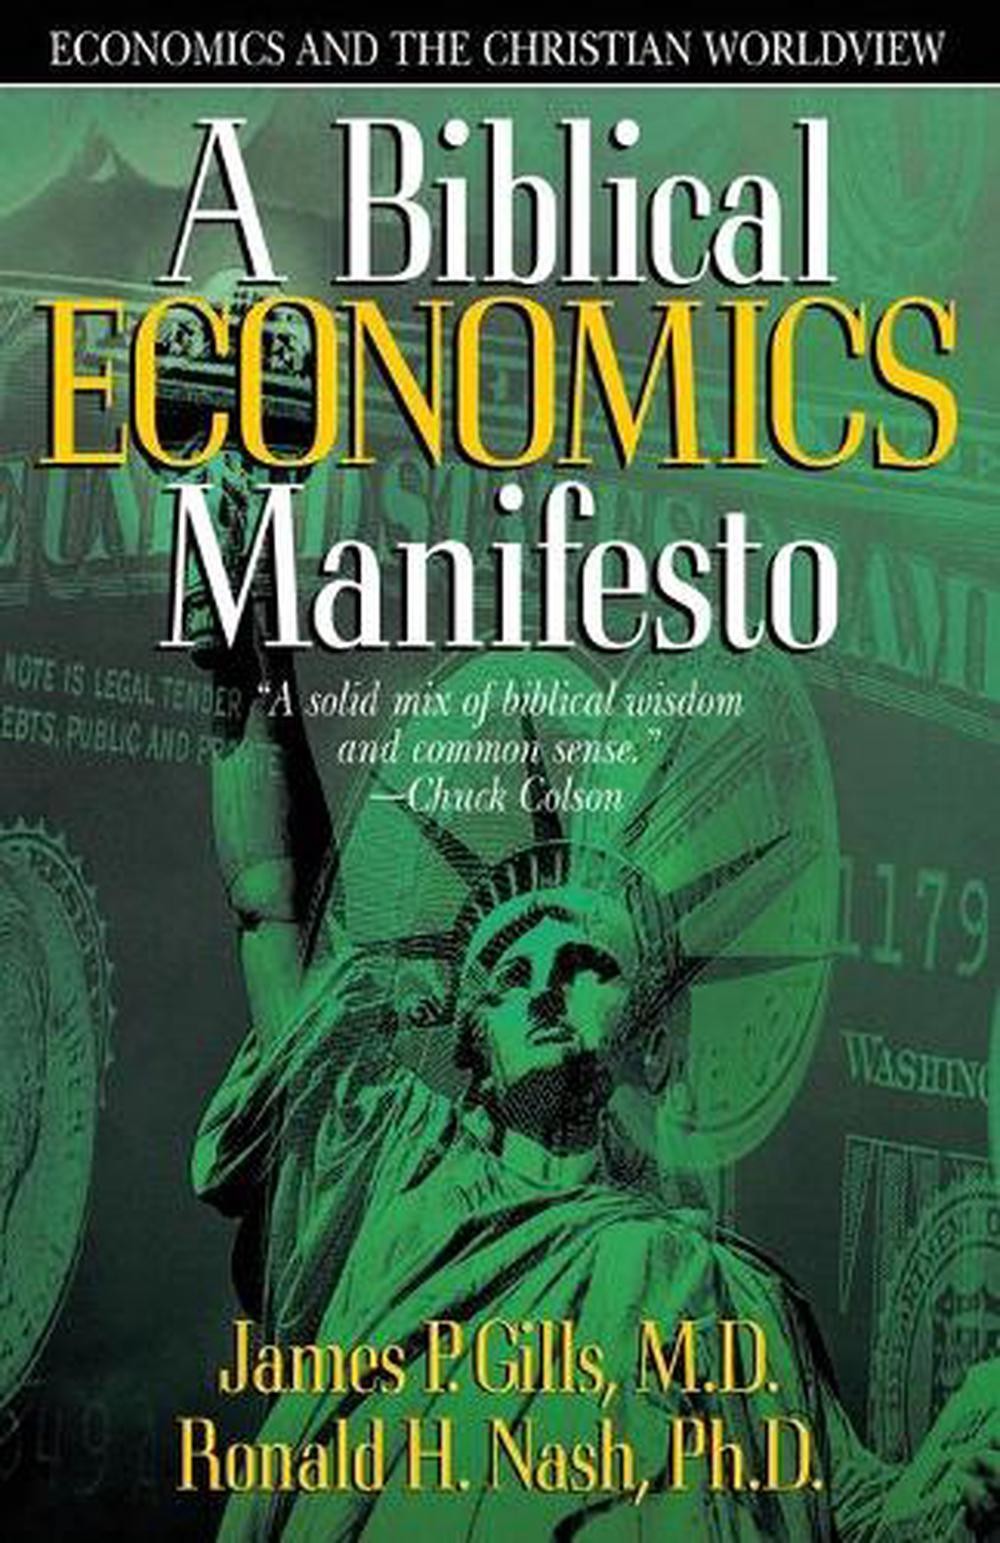 A Biblical Economics Manifesto: Economics and the Christian World View